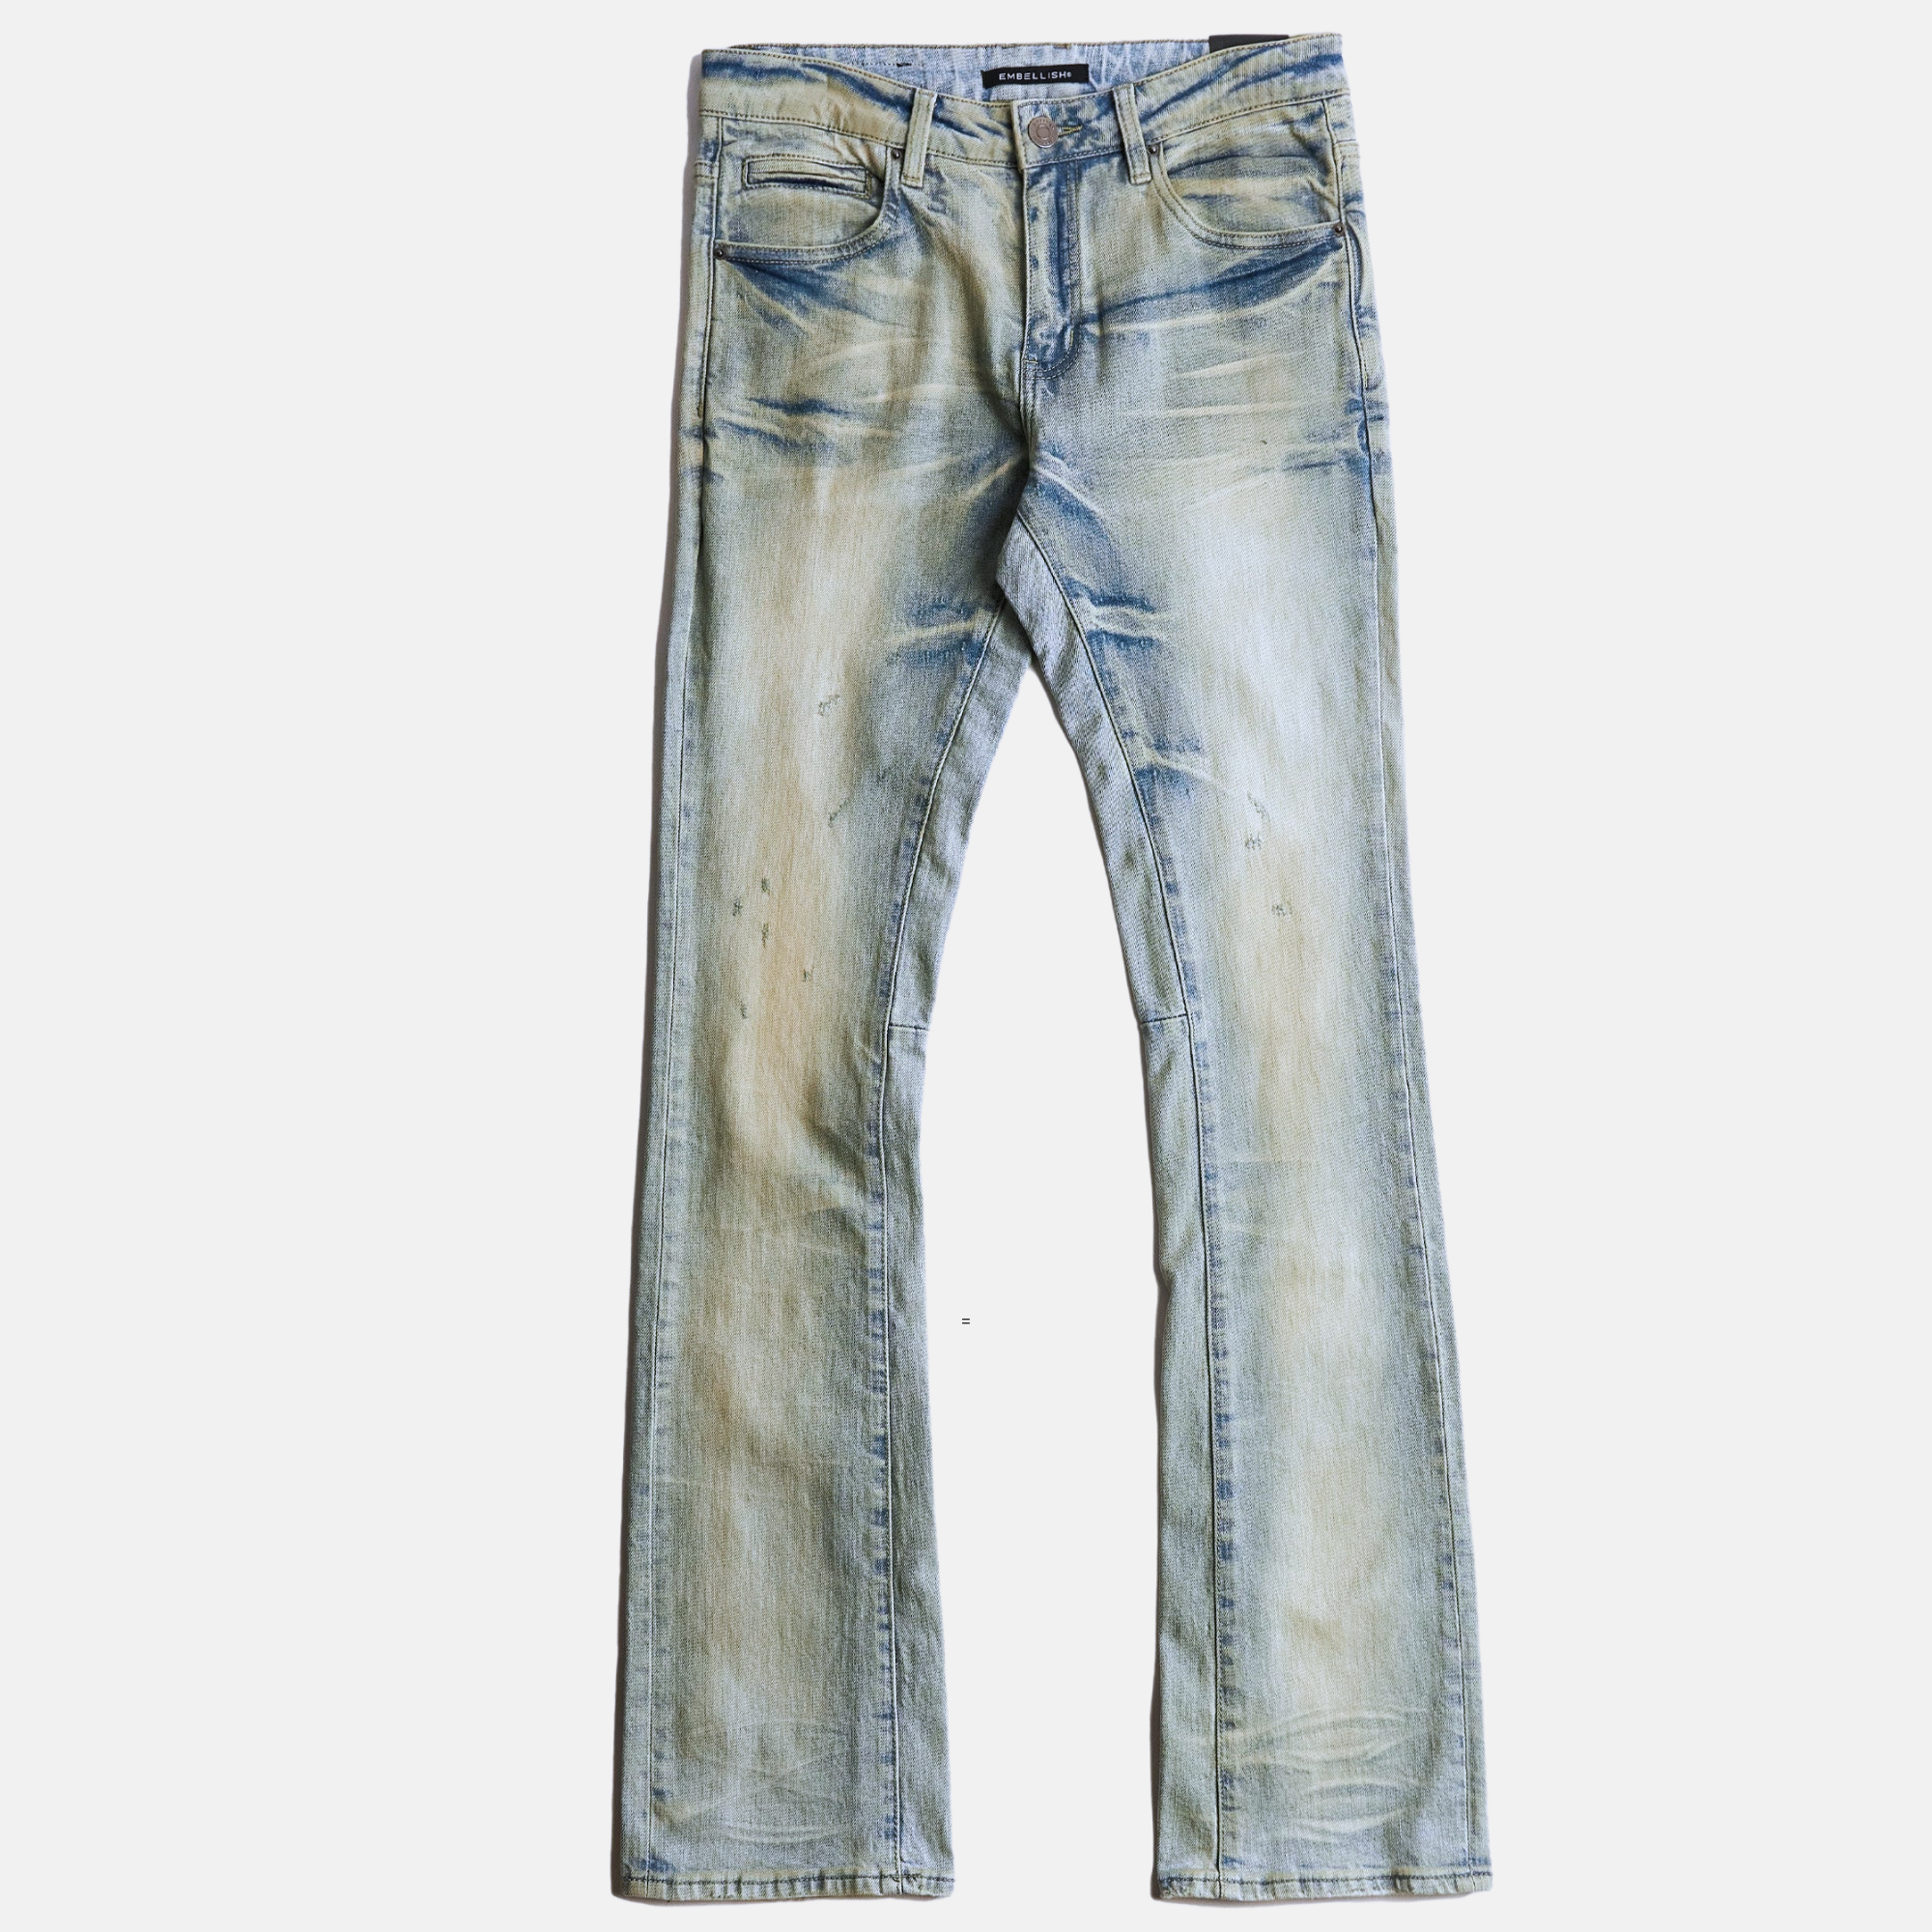 Embellish Lars Sand Blue Jeans